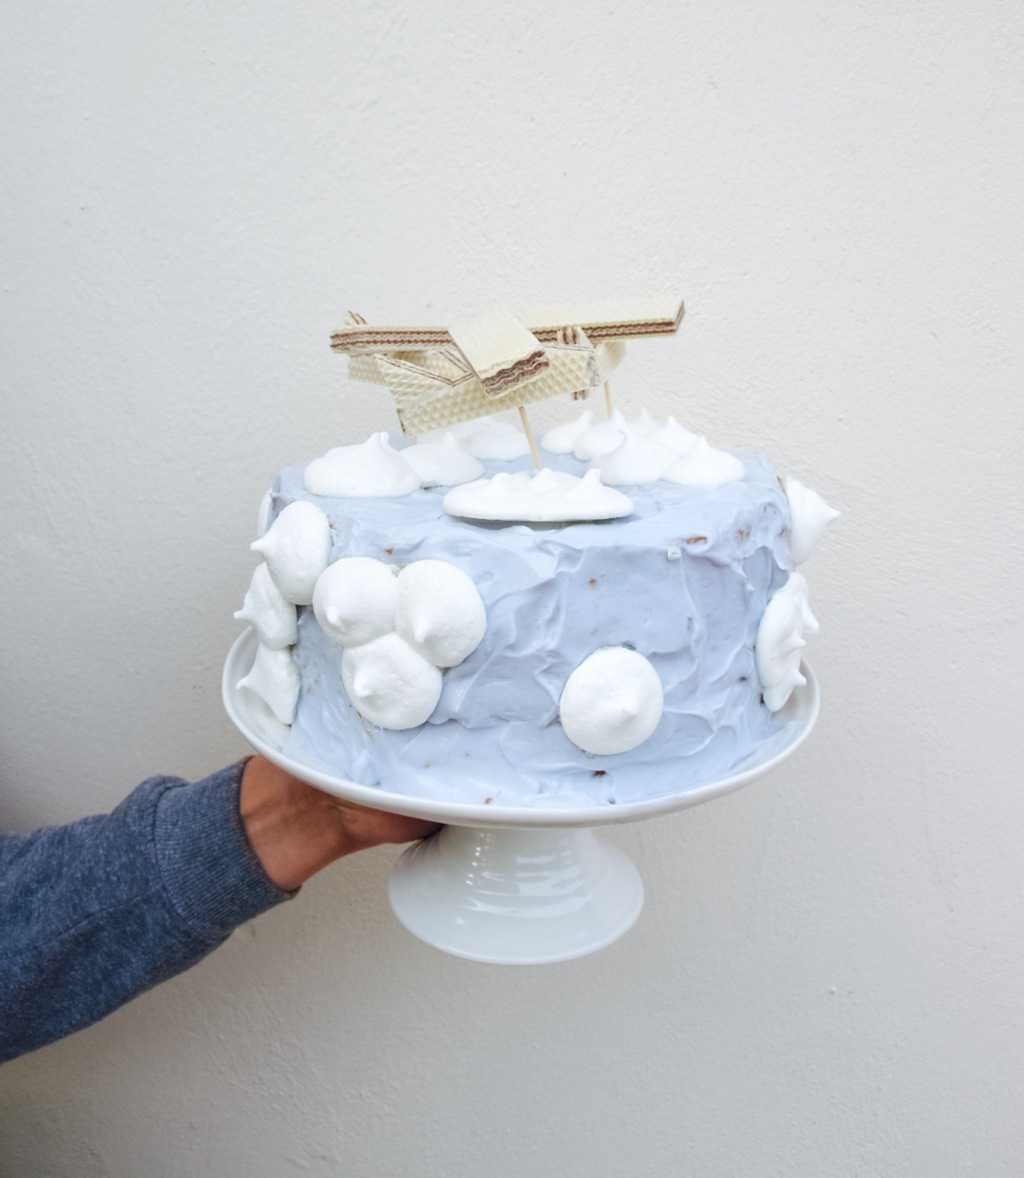 Aeroplane themed birthday cake